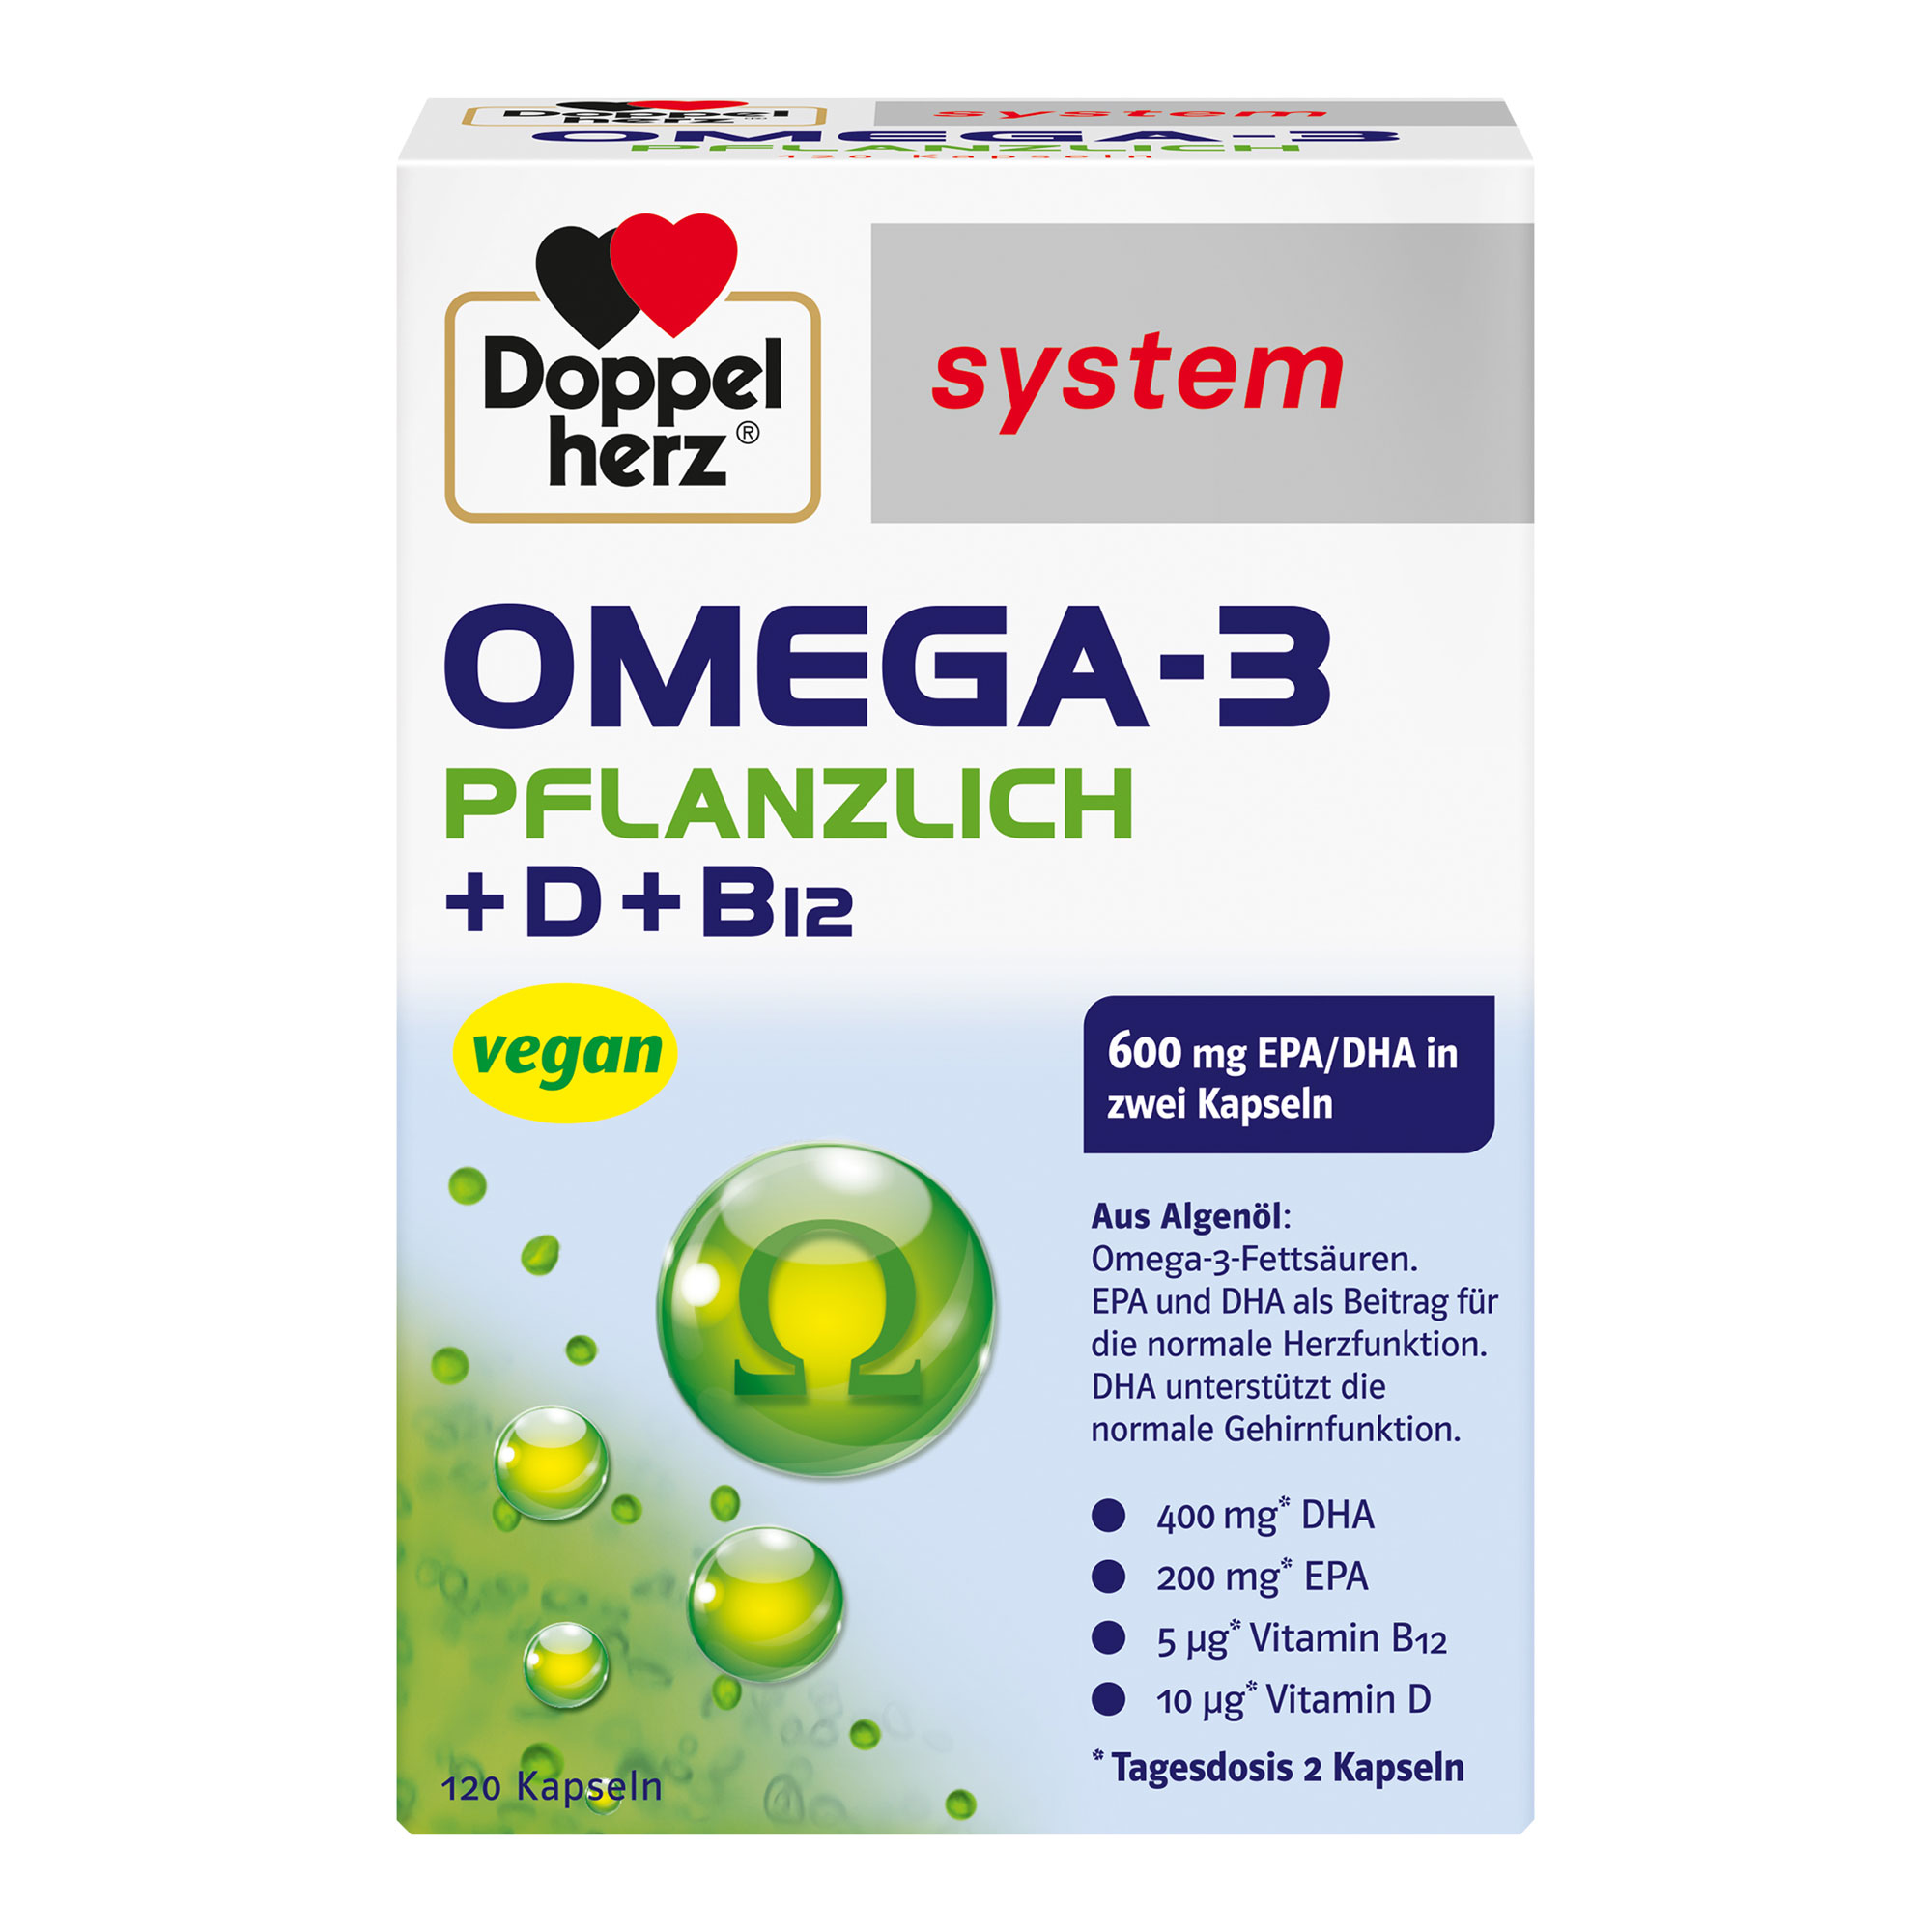 Nahrungsergänzungsmittel mit Omega-3 Fettsäuren aus Algenöl, Vitamin D.